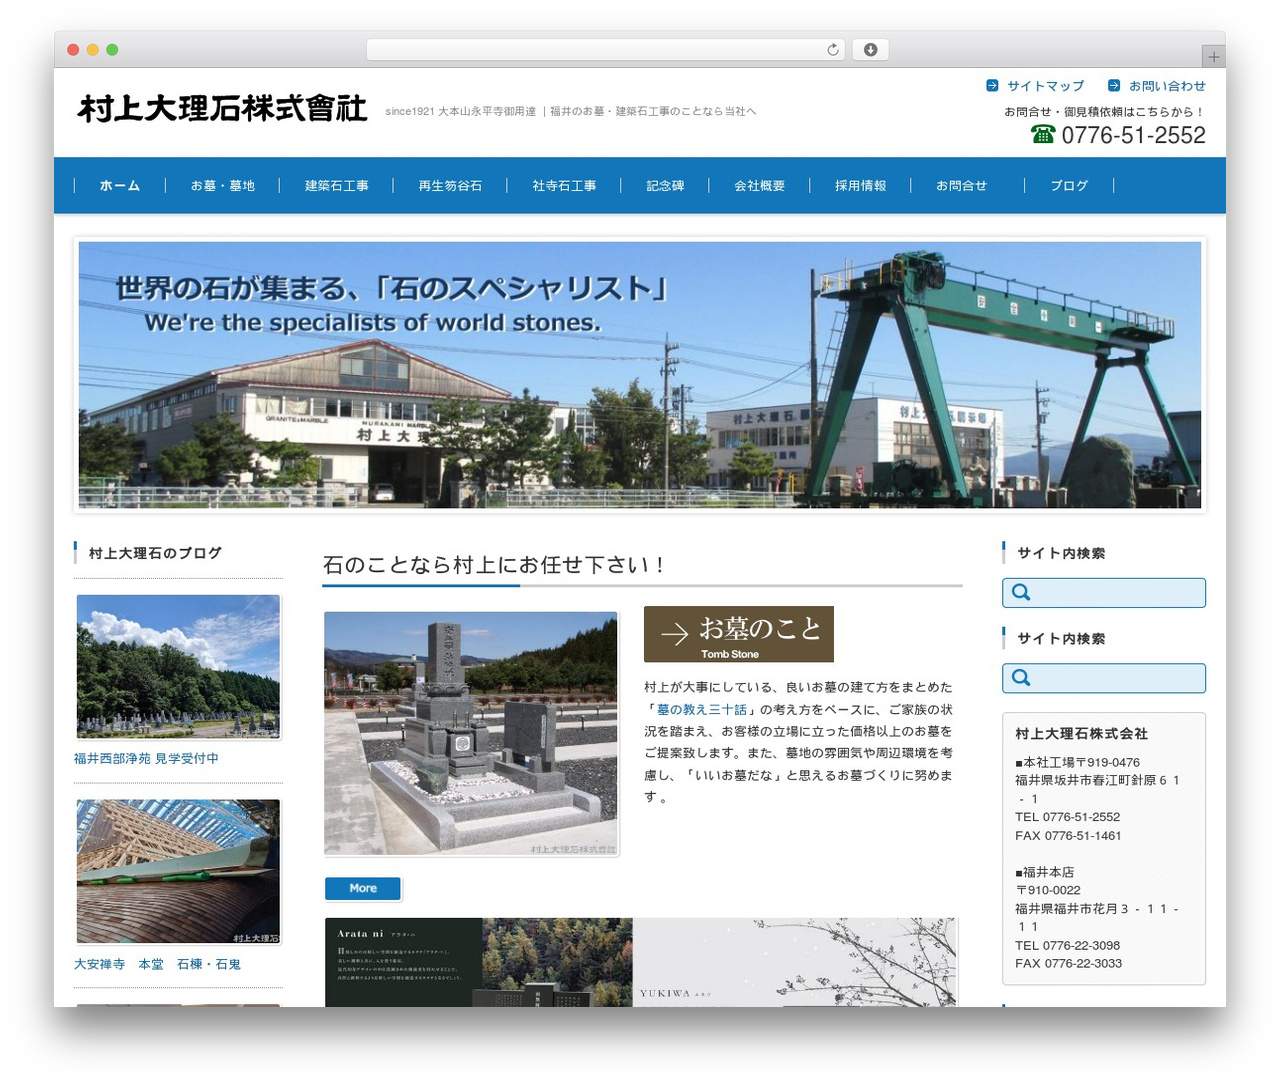 Fsv002wp Basic Corporate 01 Blue Best Wordpress Template By Firstserver Inc Murakami Dairiseki Co Jp